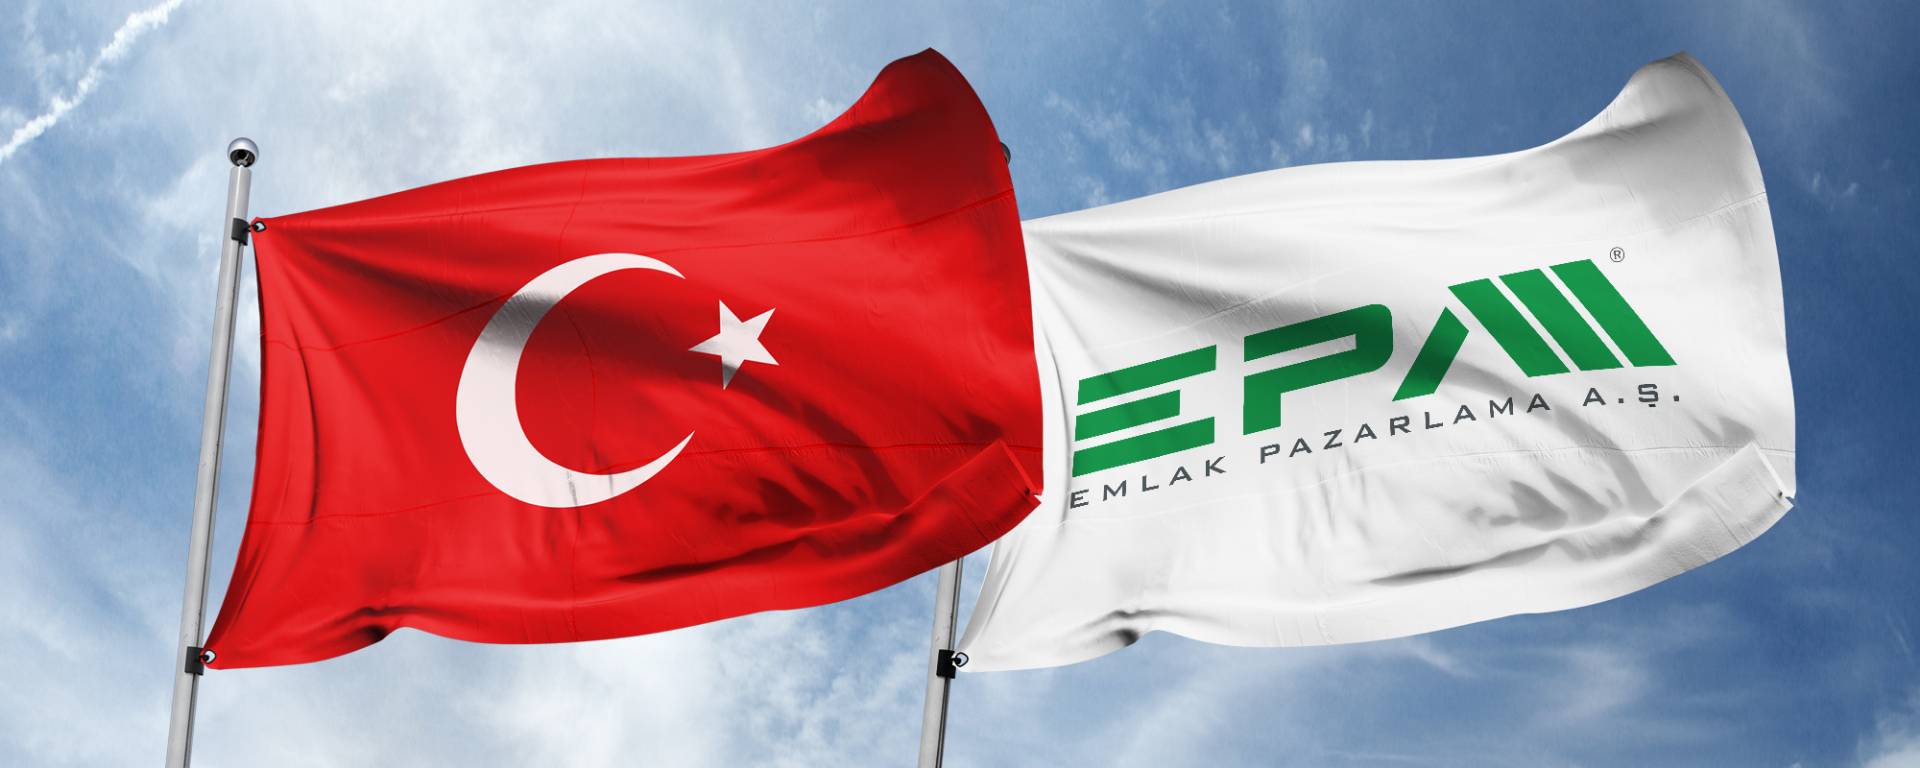 www.epaemlak.com.tr EPA EMLAK PAZARLAMA A.Ş. 